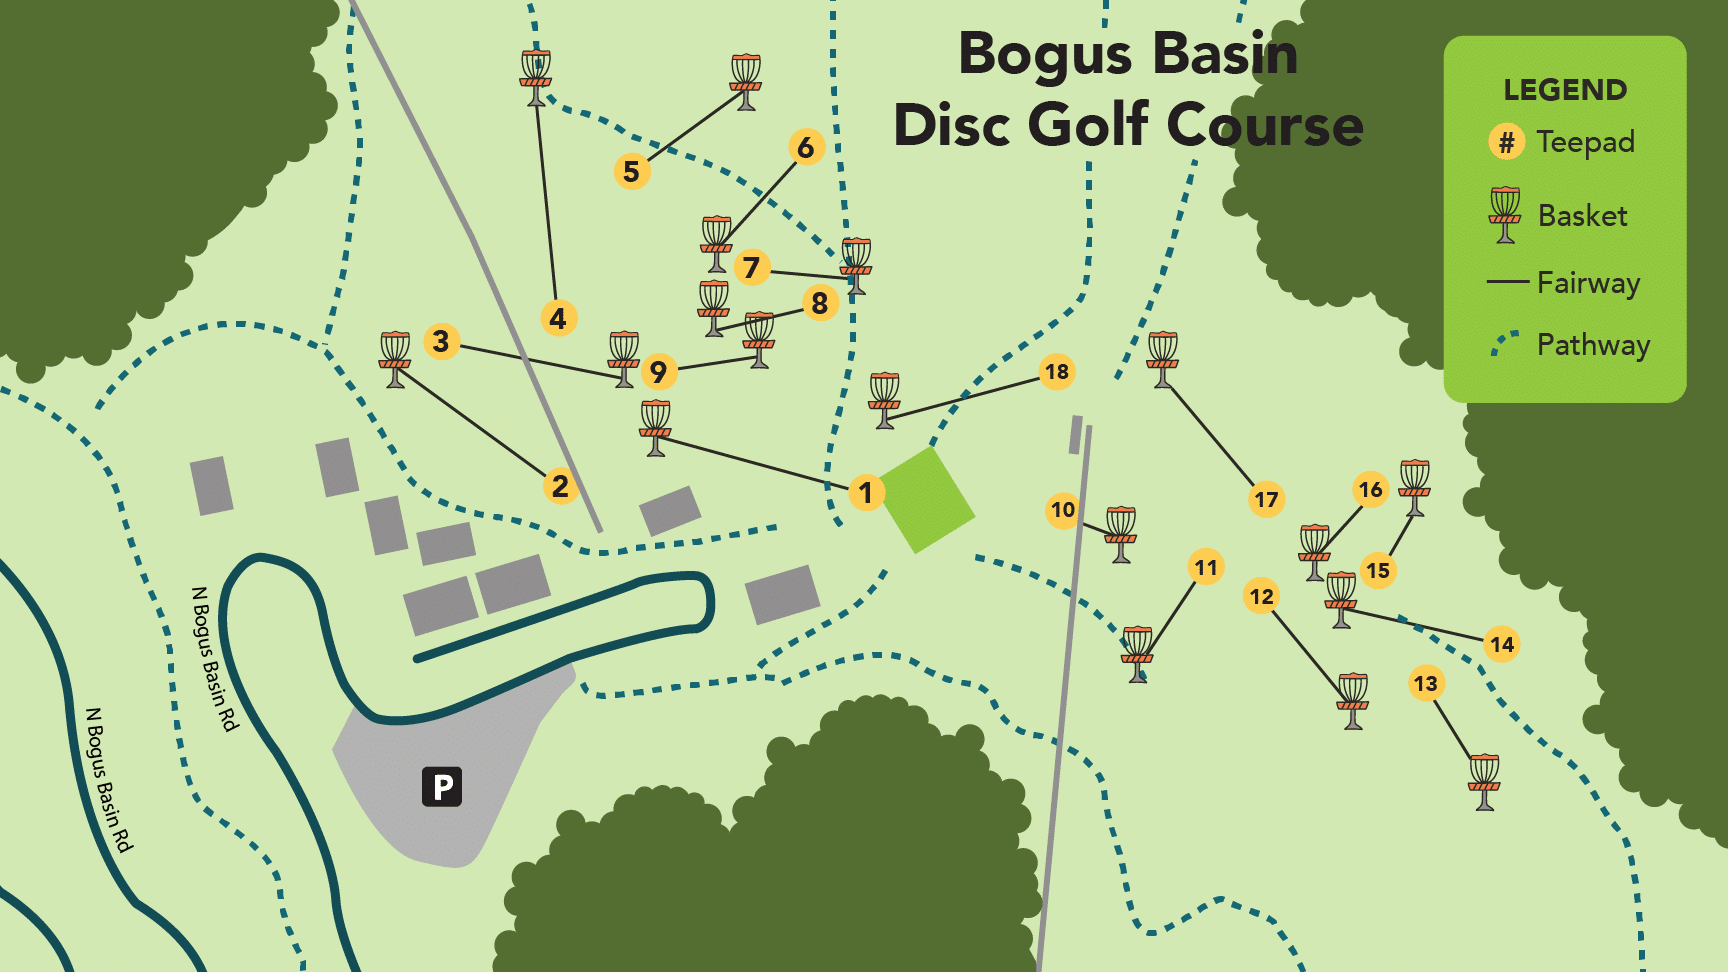 BogusBasin_DiscGolf_3x